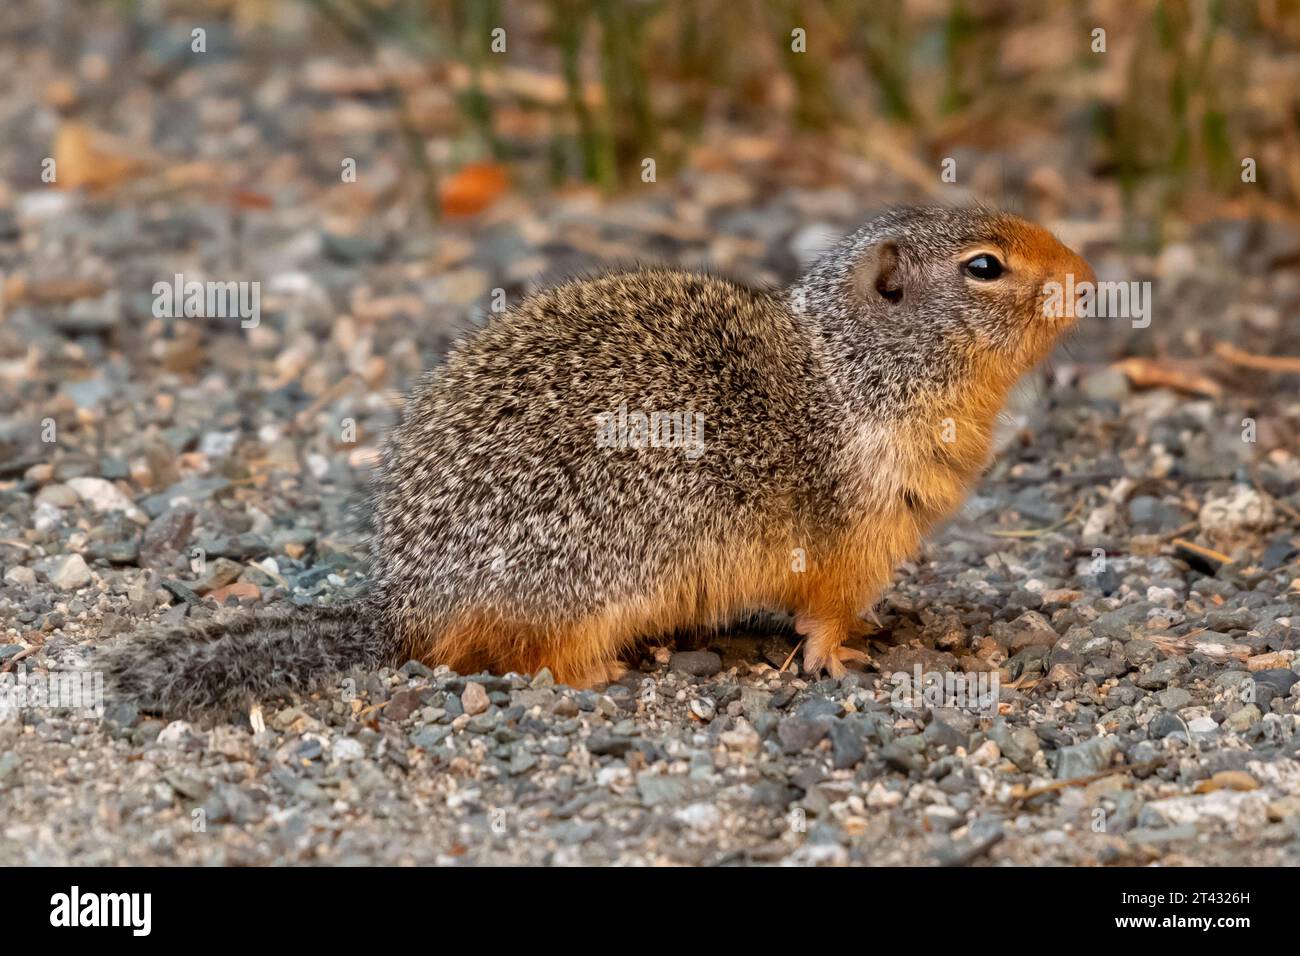 Close-up of a Ground Squirrel, British Columbia, Canada Stock Photo